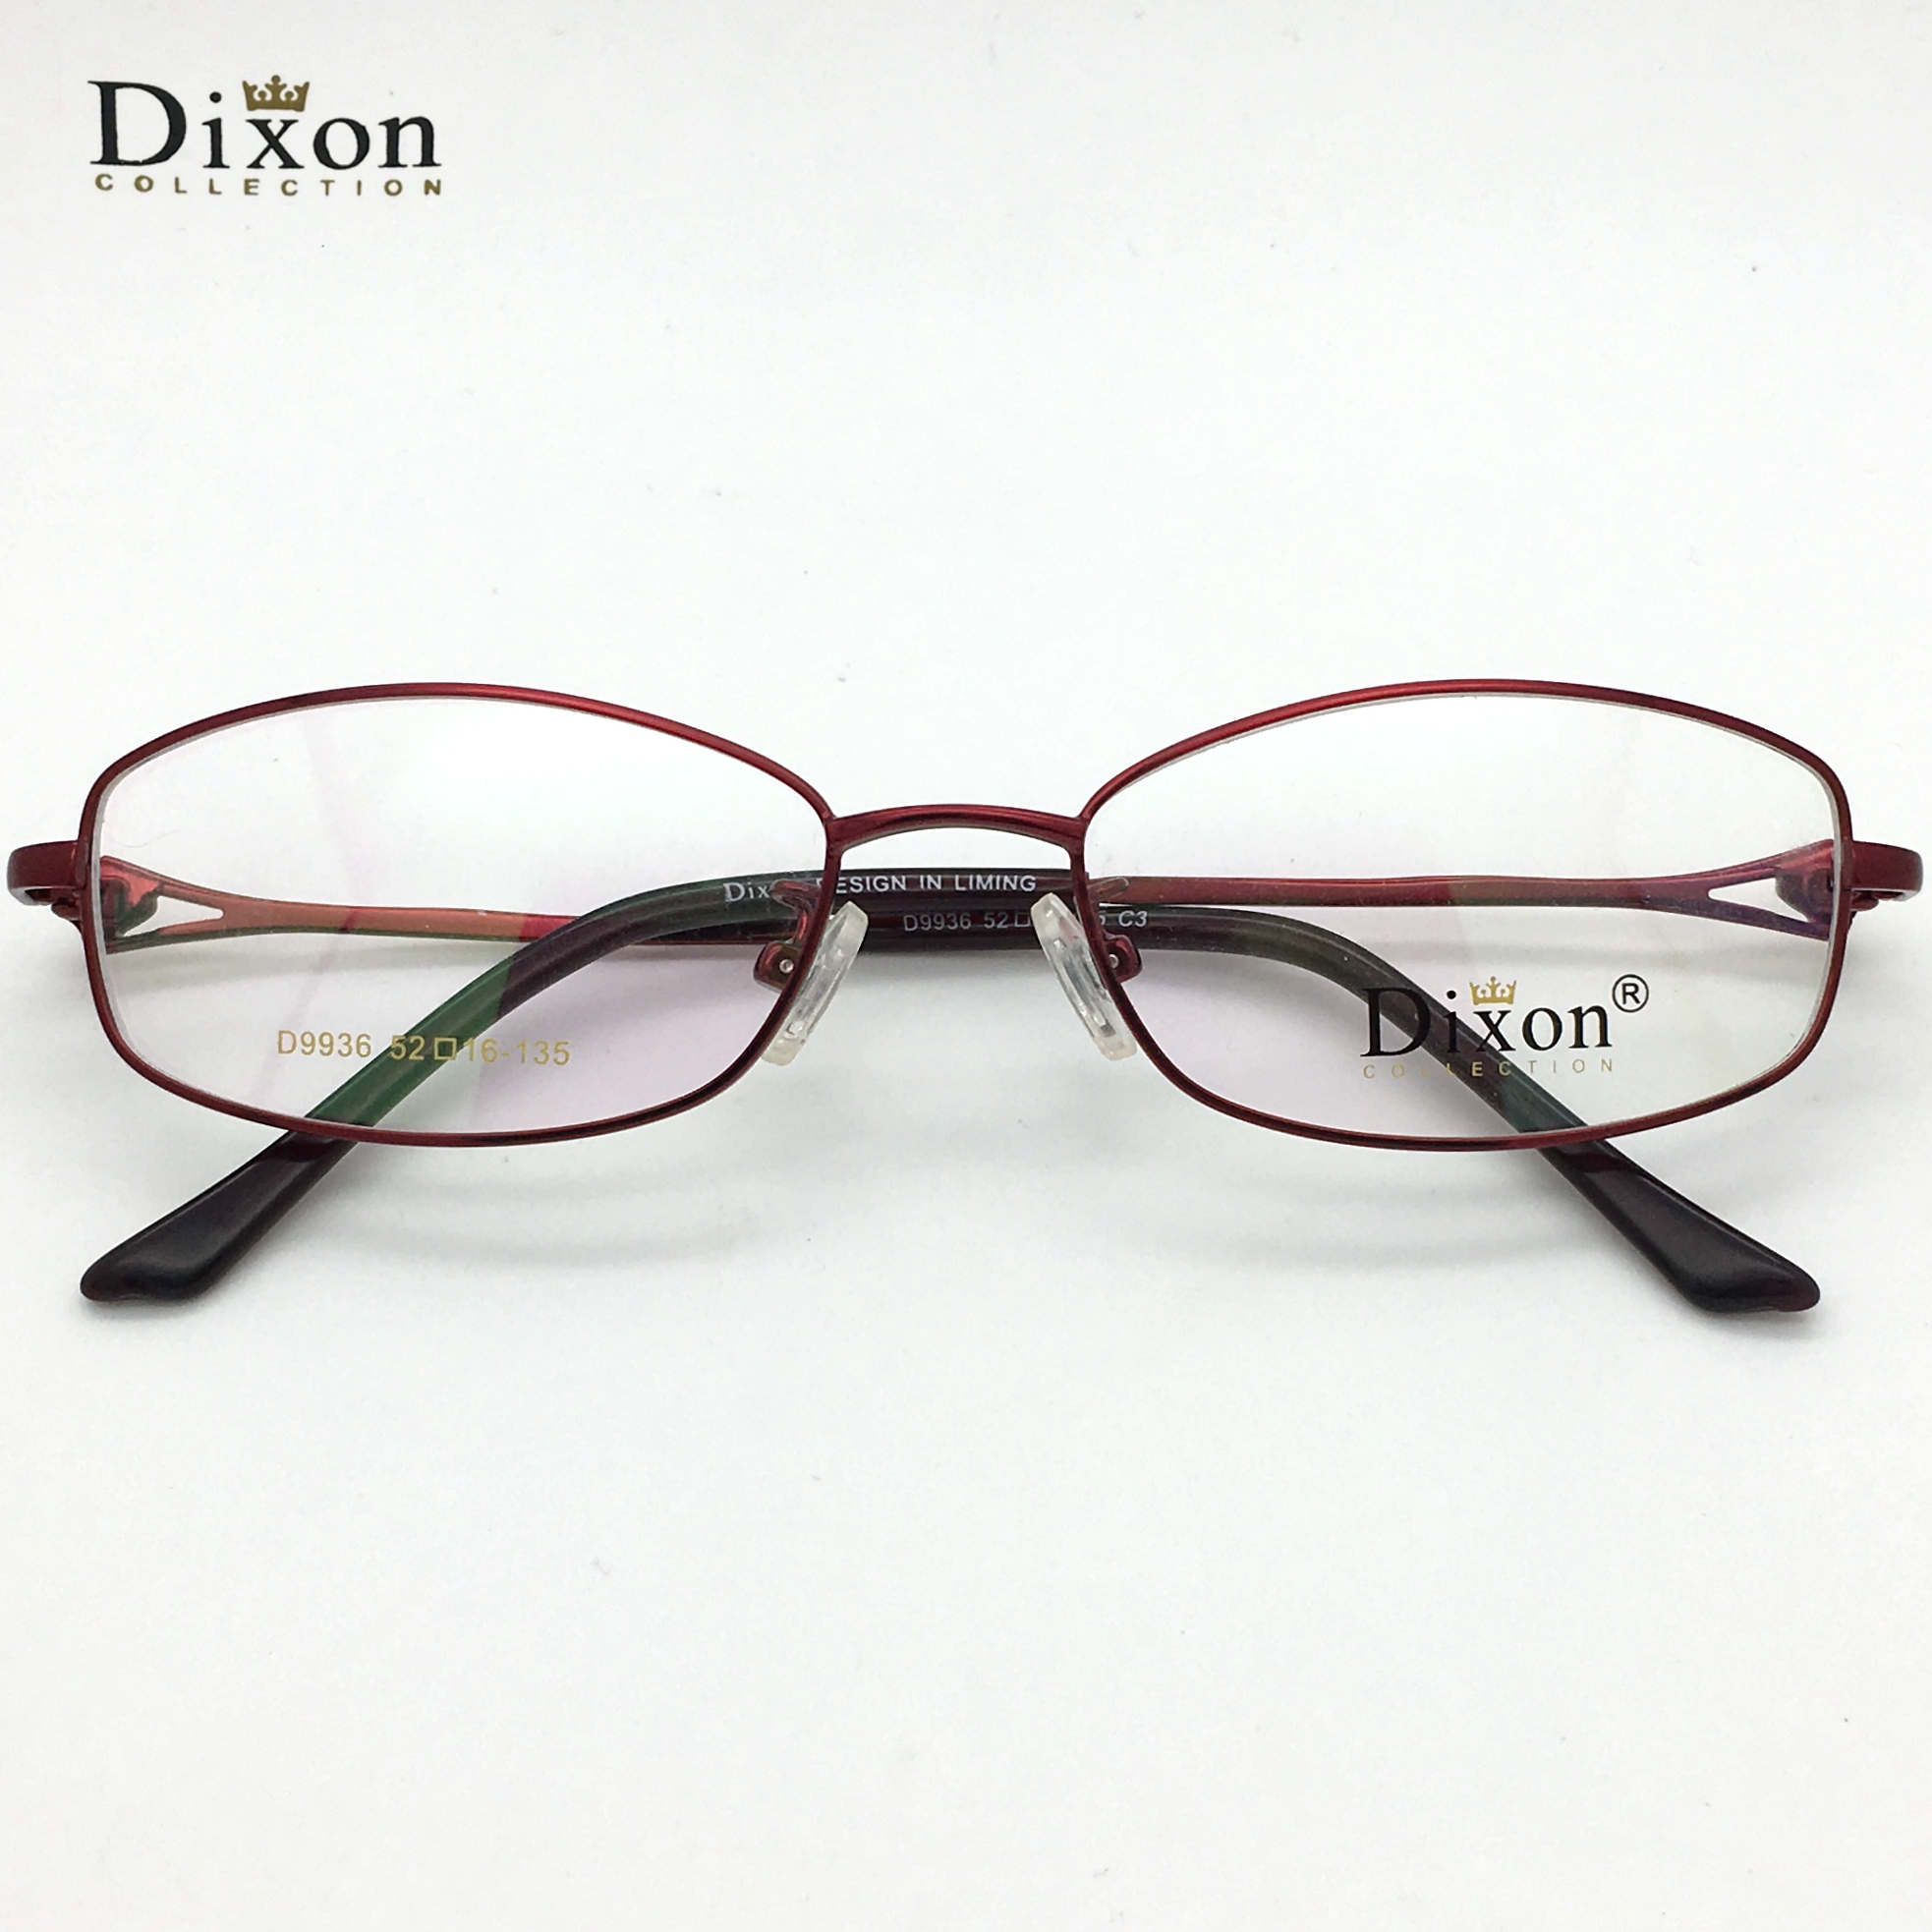 Dixon迪克逊眼镜时尚雕花女款酒红色全框眼镜架配近视防蓝光D9936